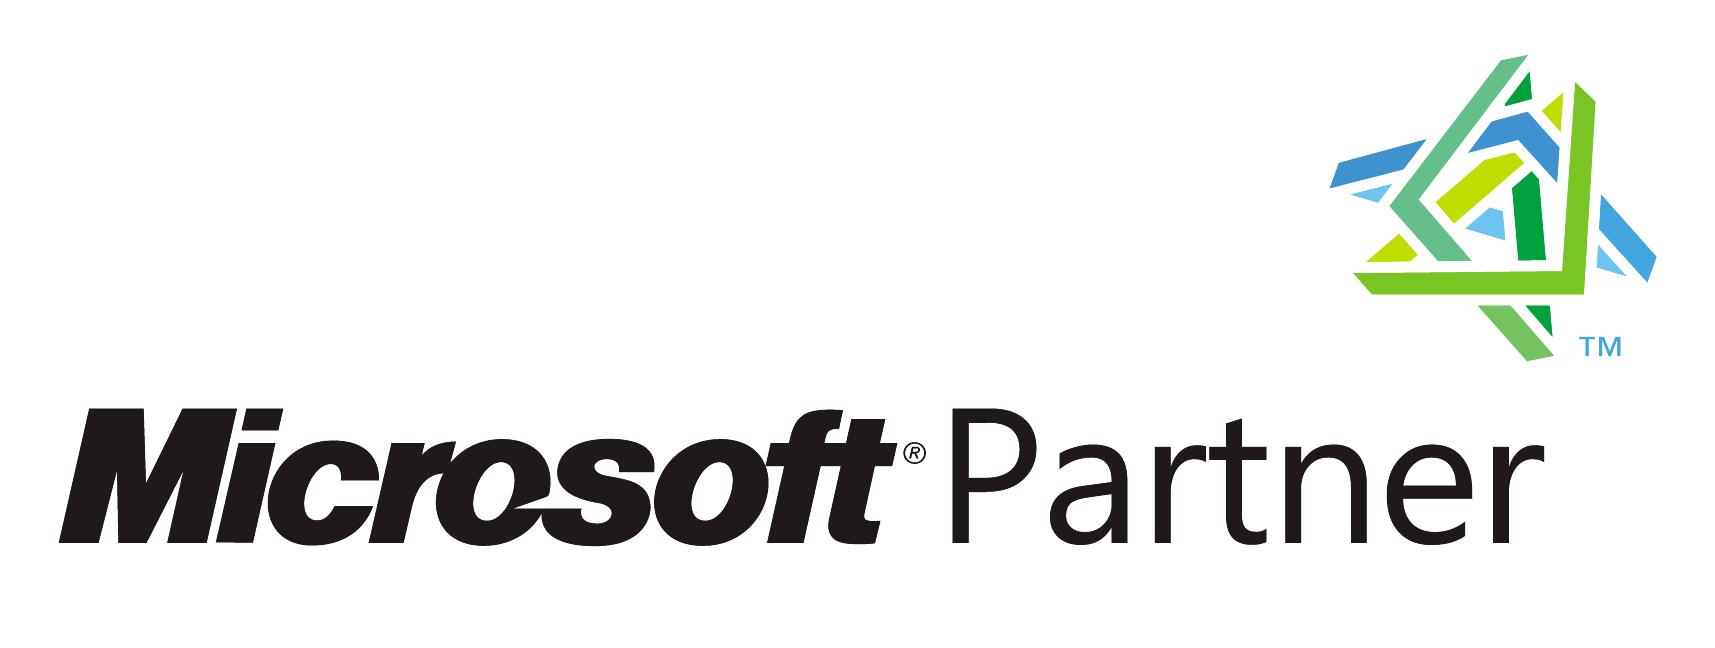 Microsoft Partner Network Logo photo - 1